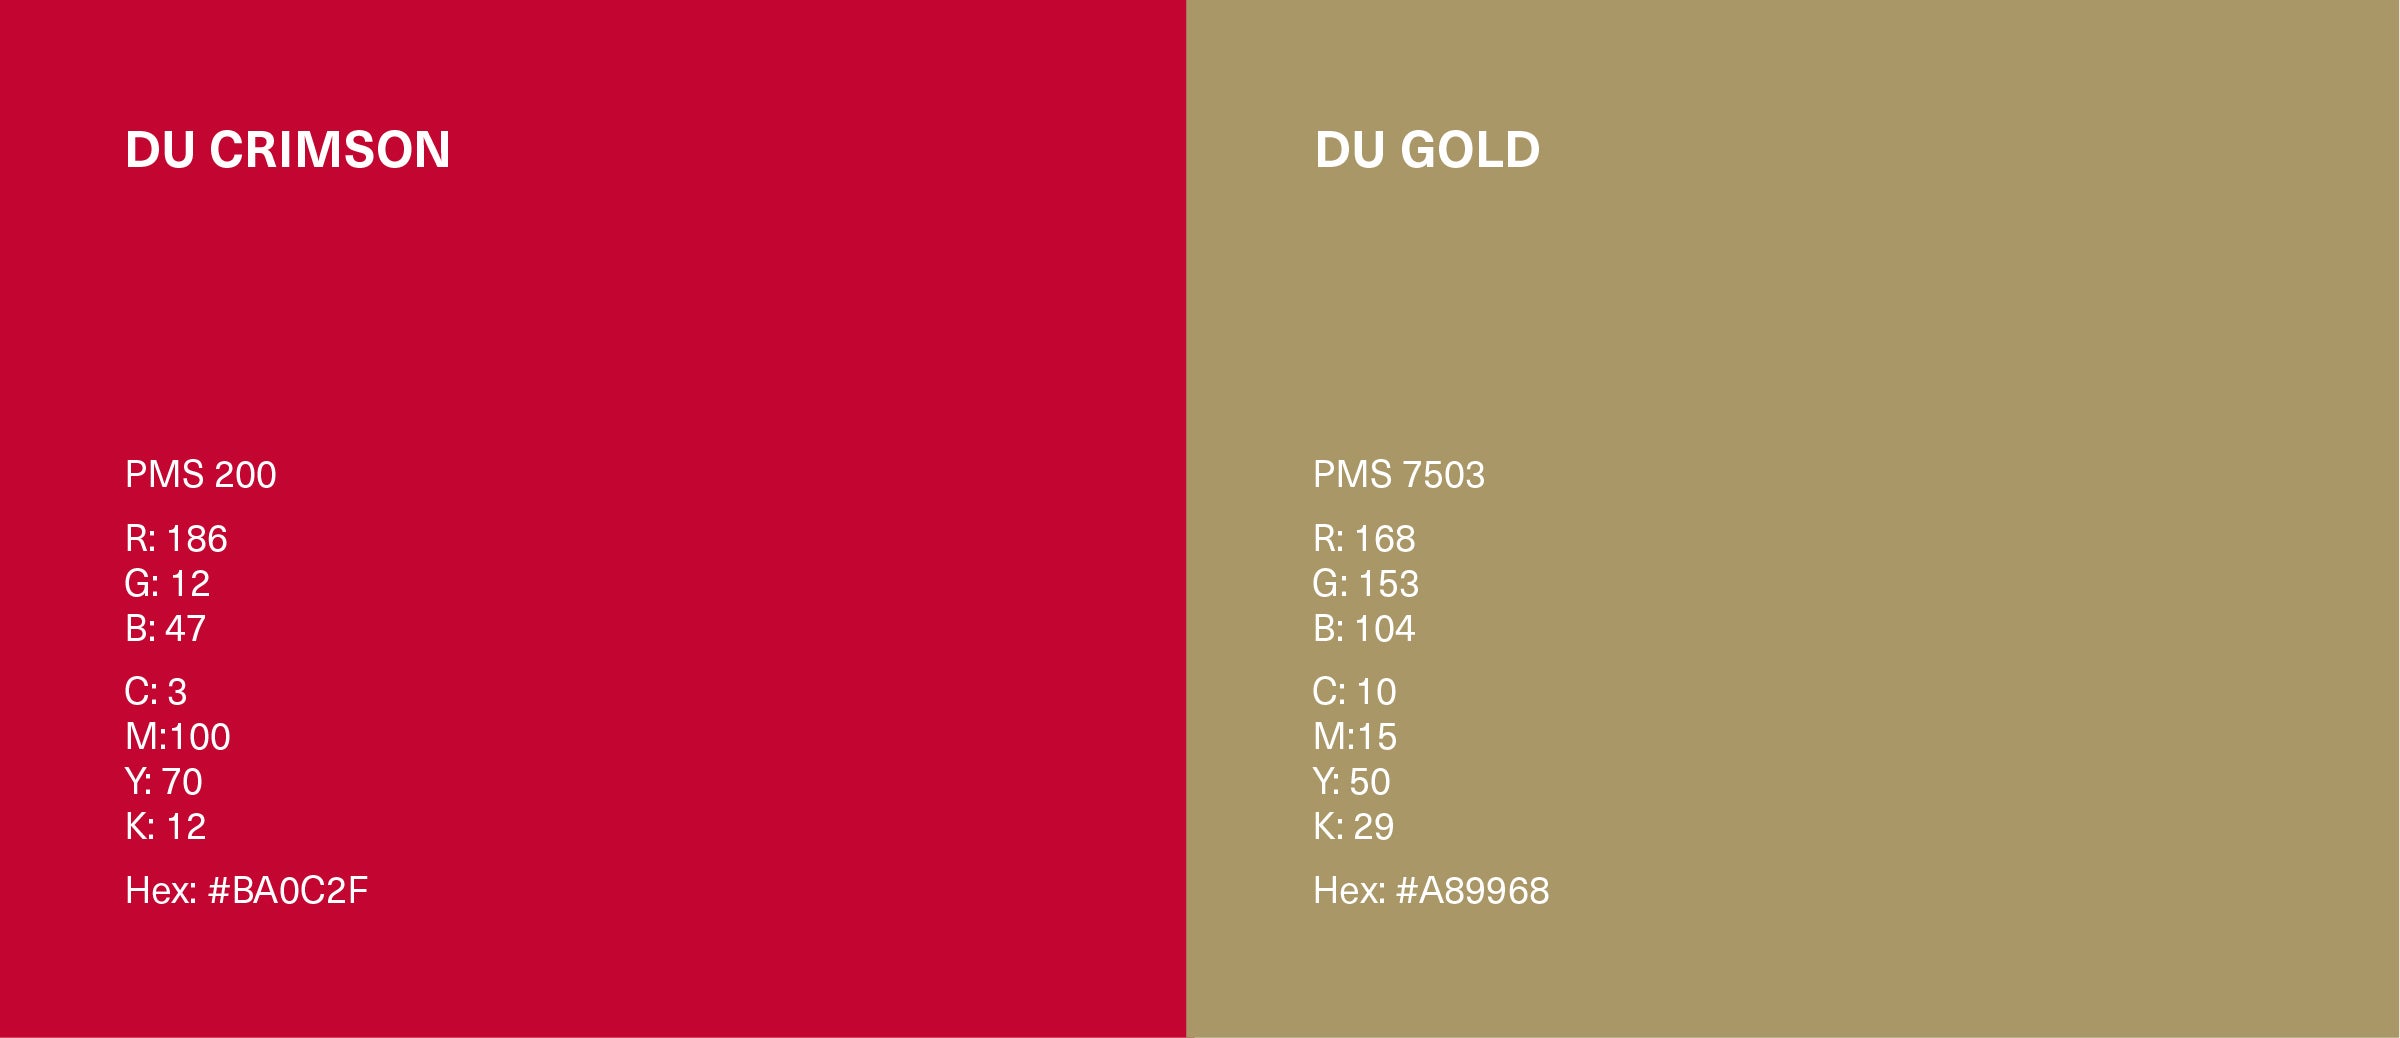 DU crimson and gold